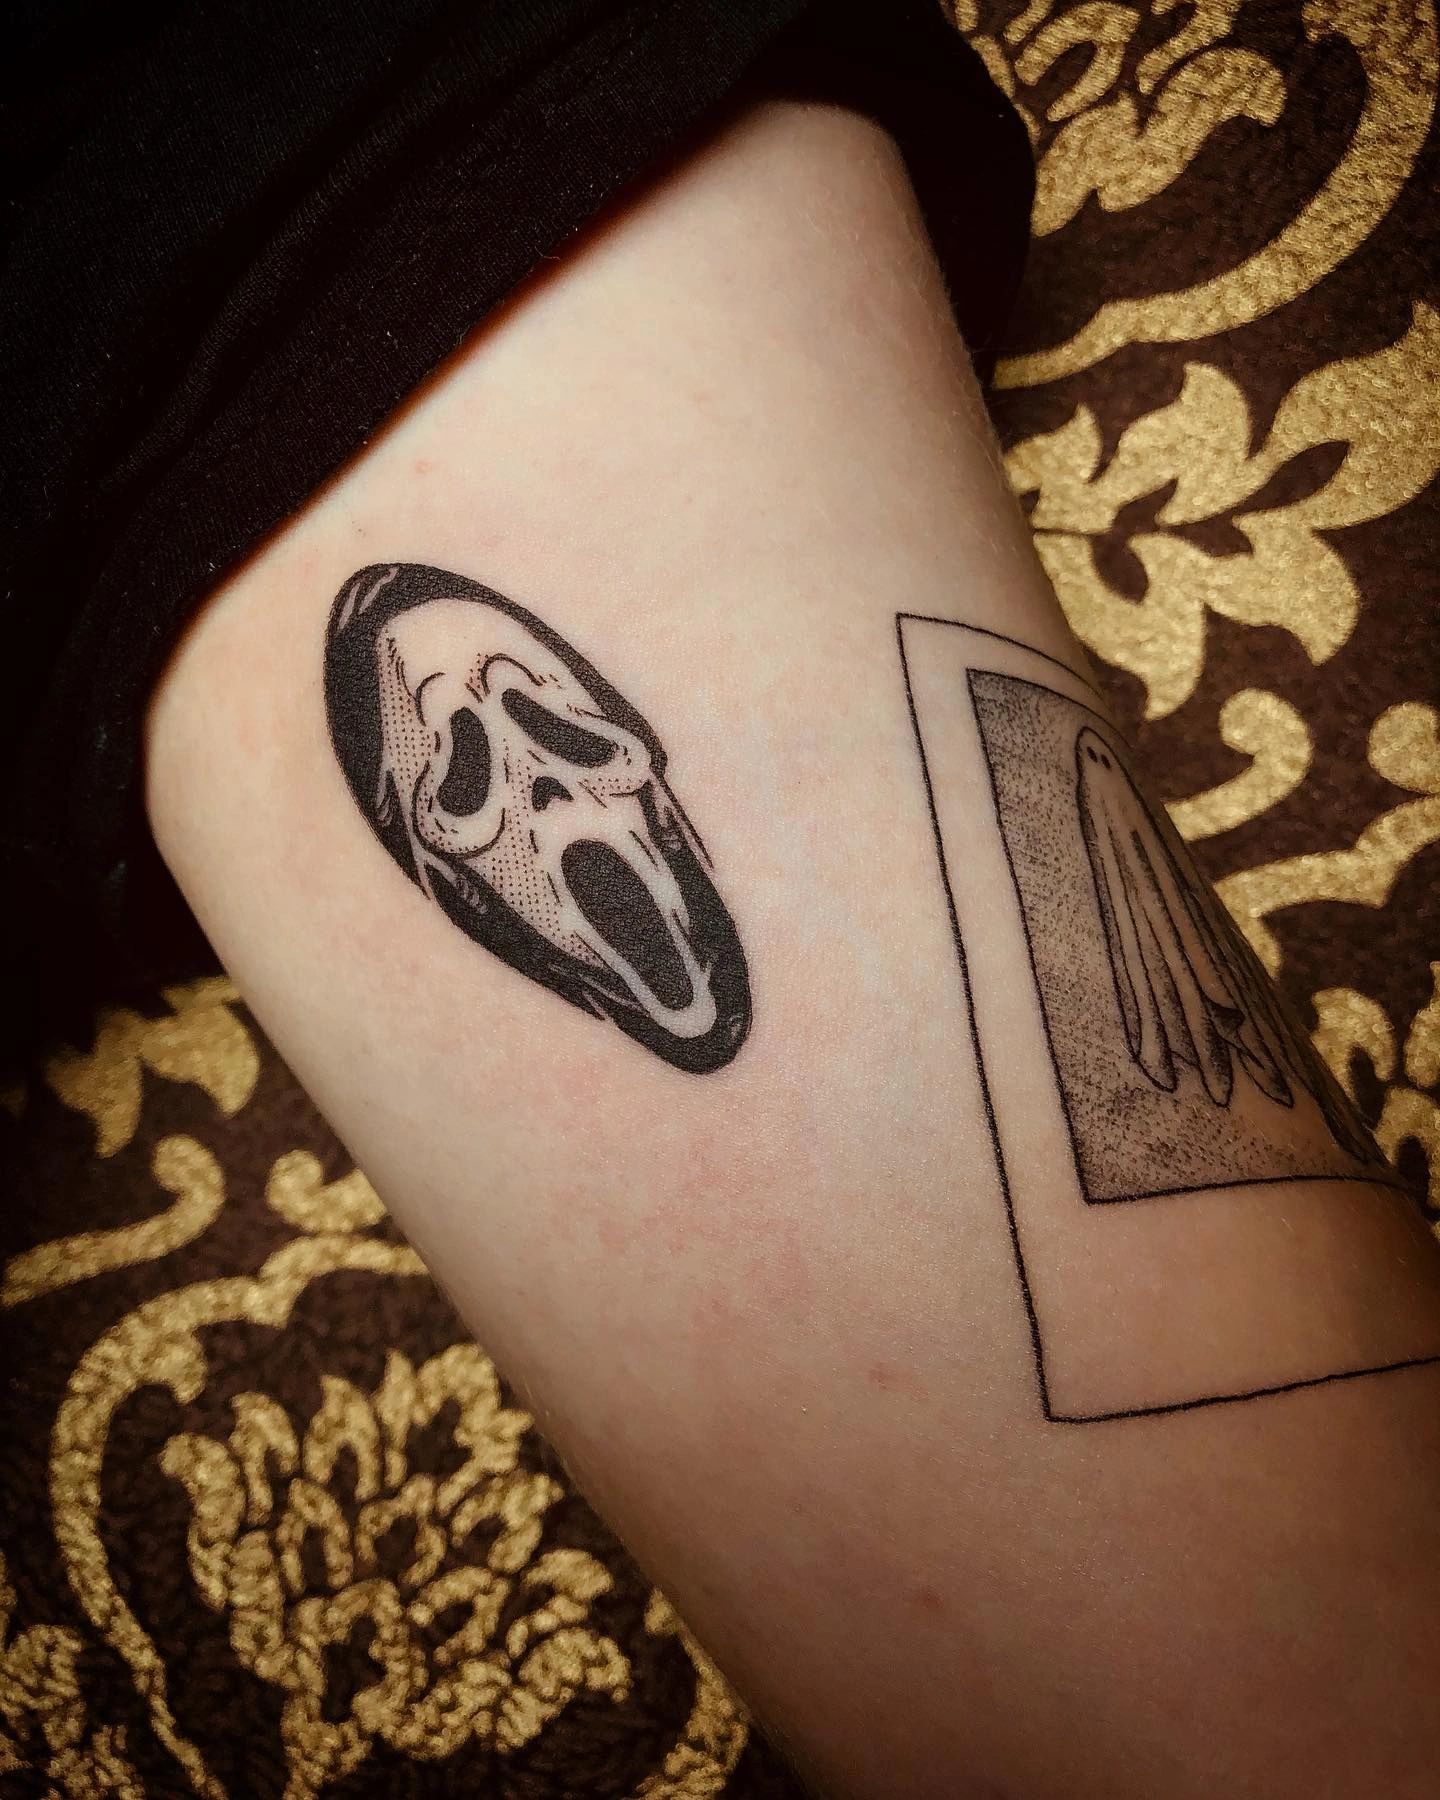 135 Suspenseful Scream Tattoos For Every Horror Movie Fan